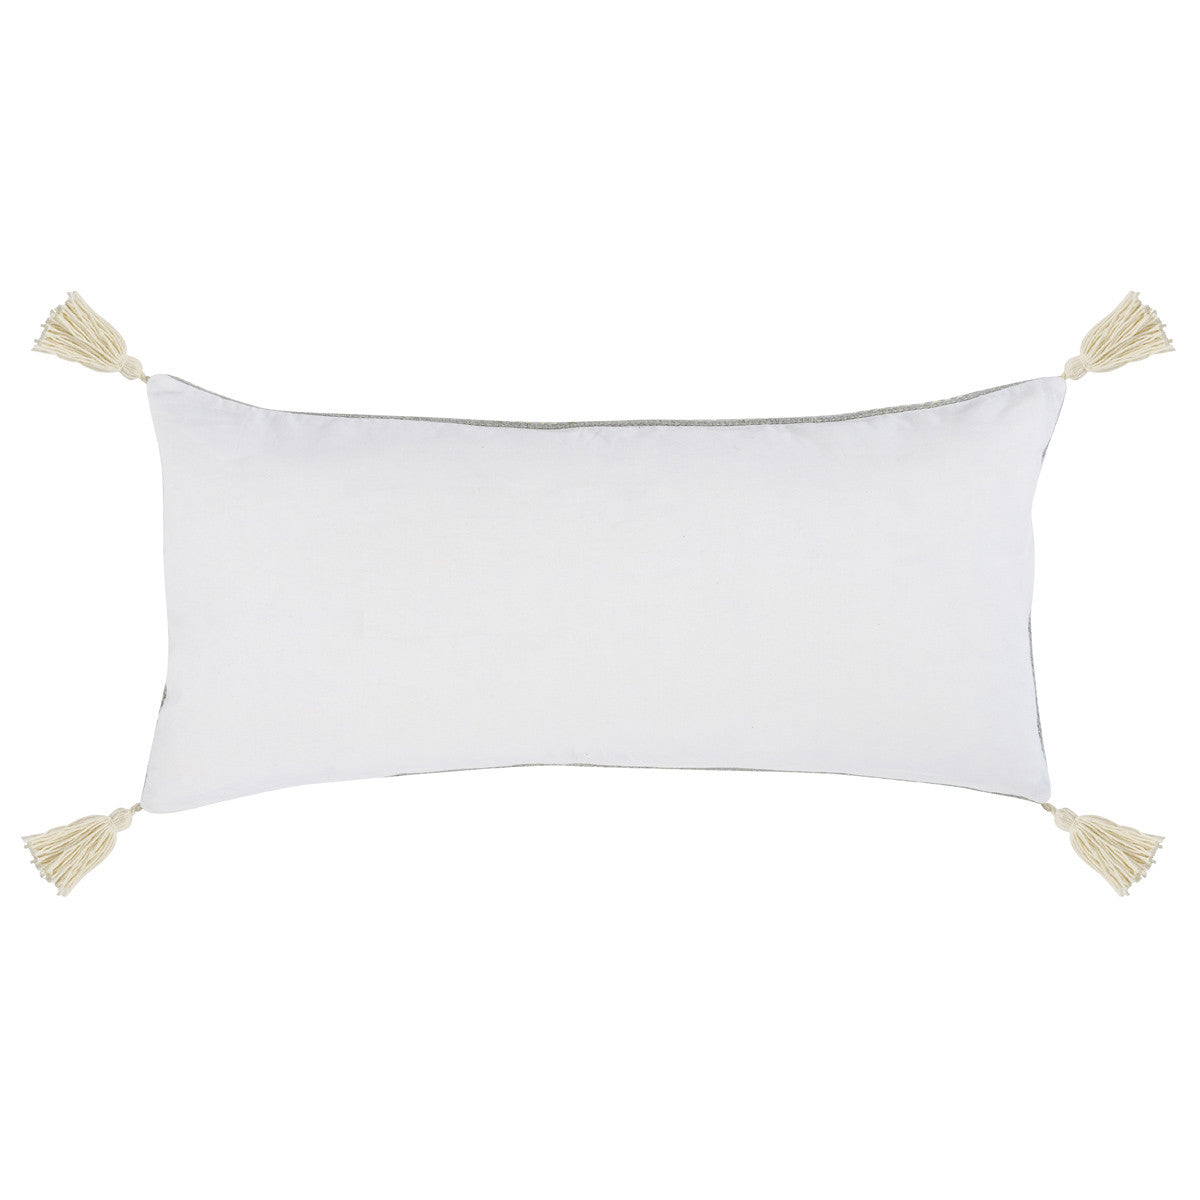 16" X 36" Gray Jute Patterned Zippered Pillow